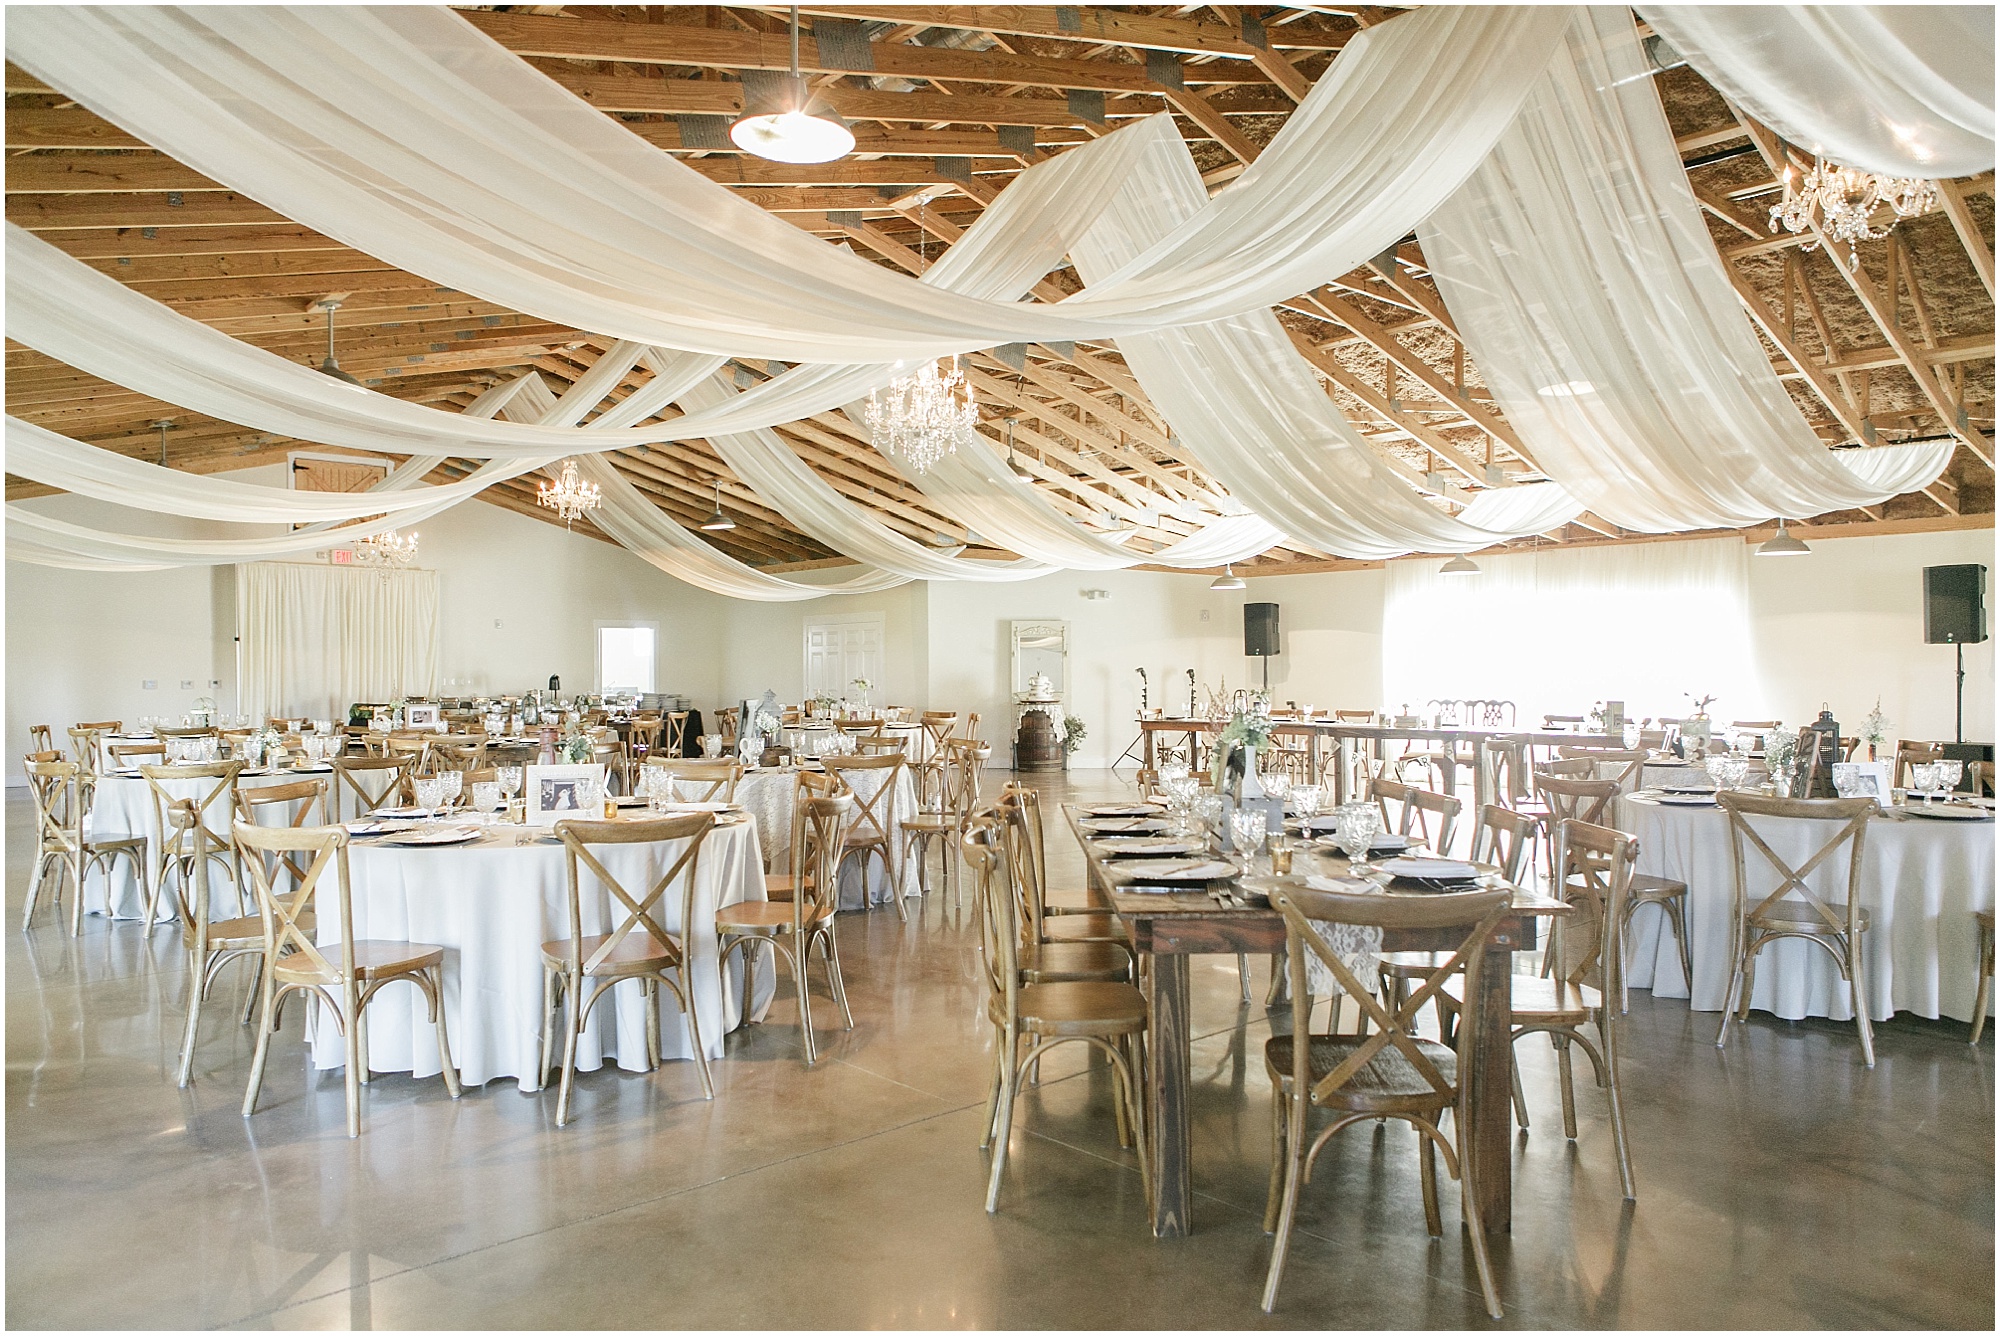 Reception space for vintage outdoor wedding